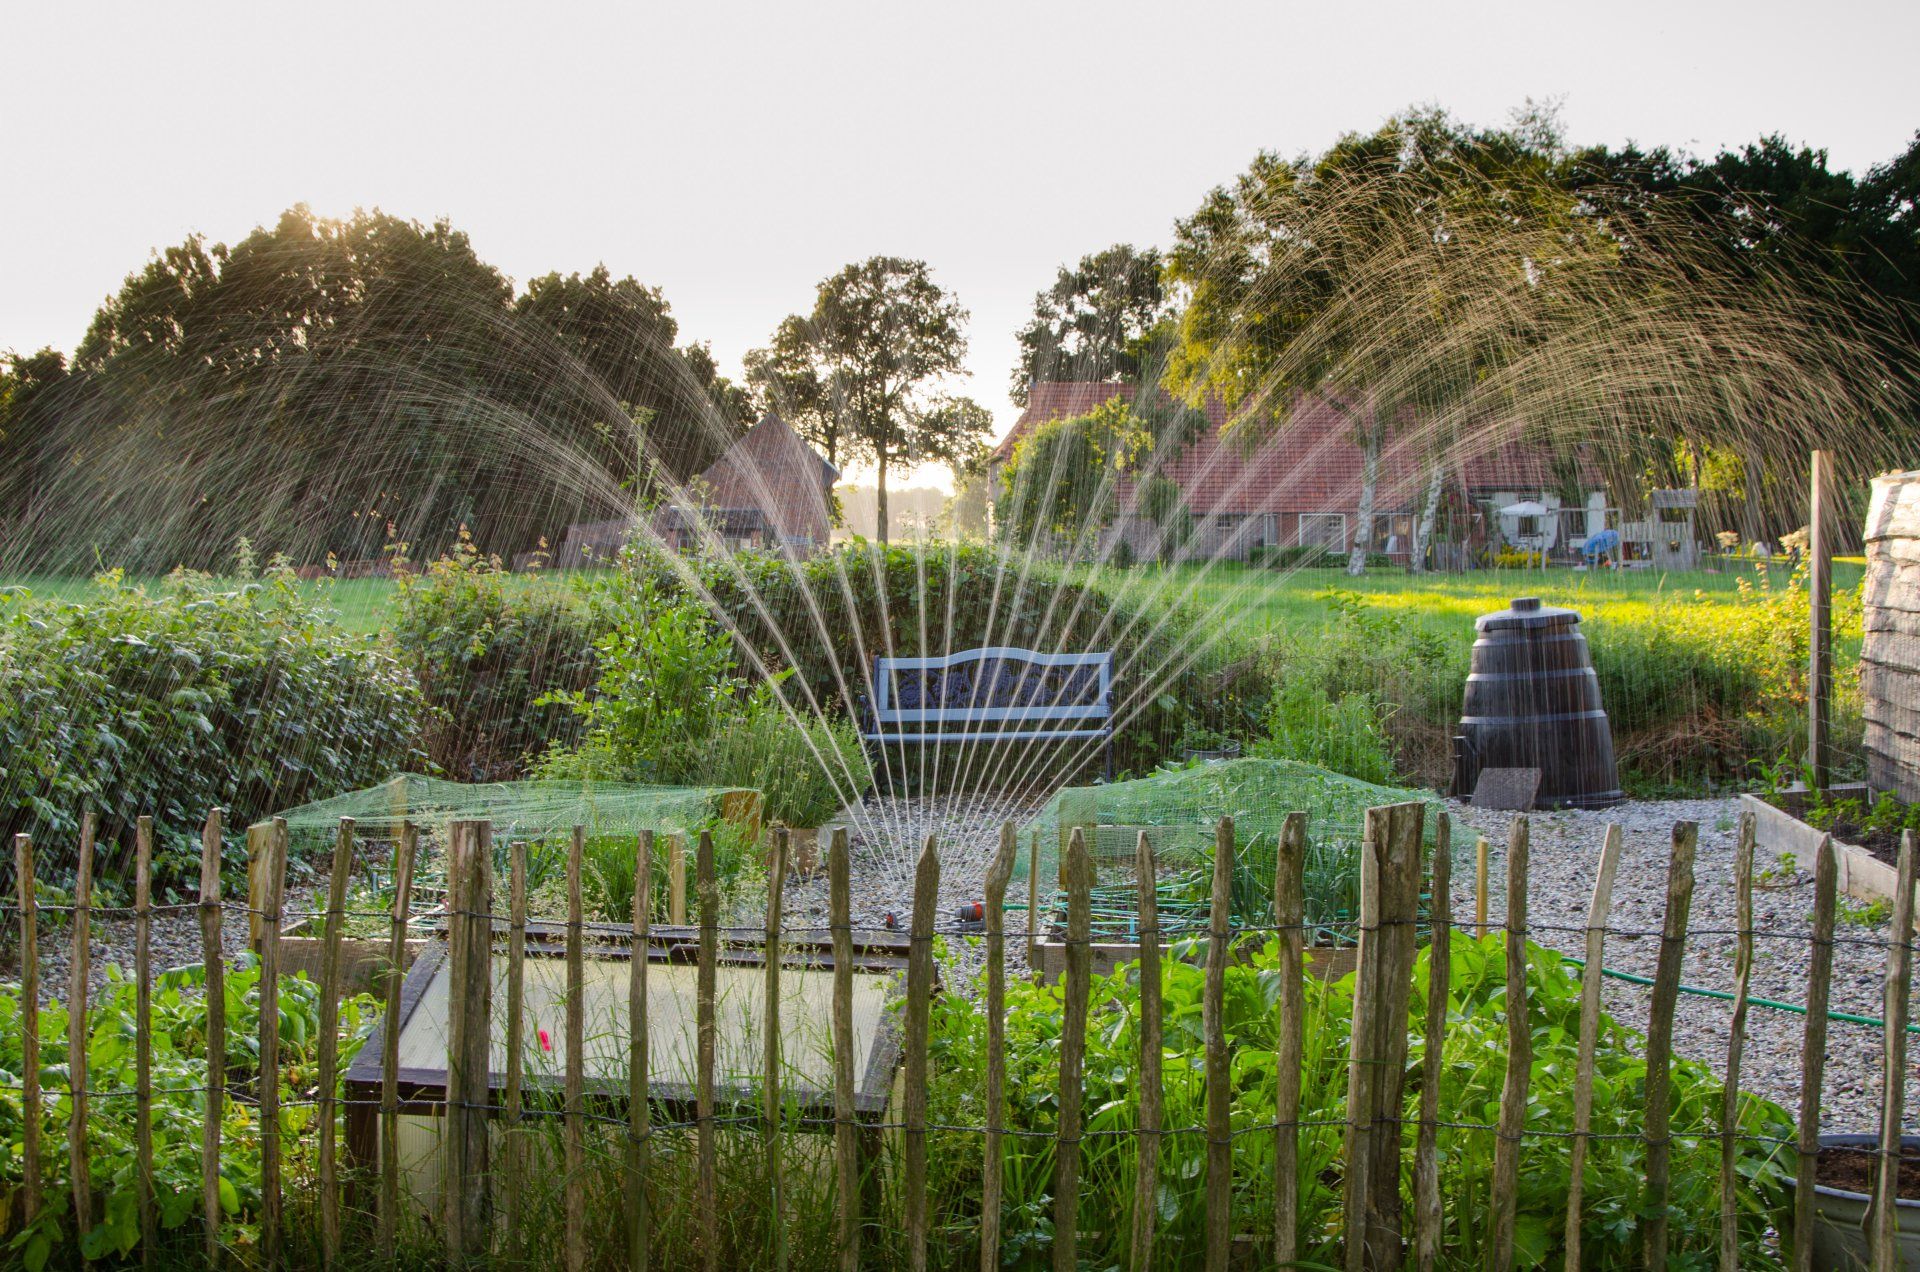 a sprinkler system in a garden